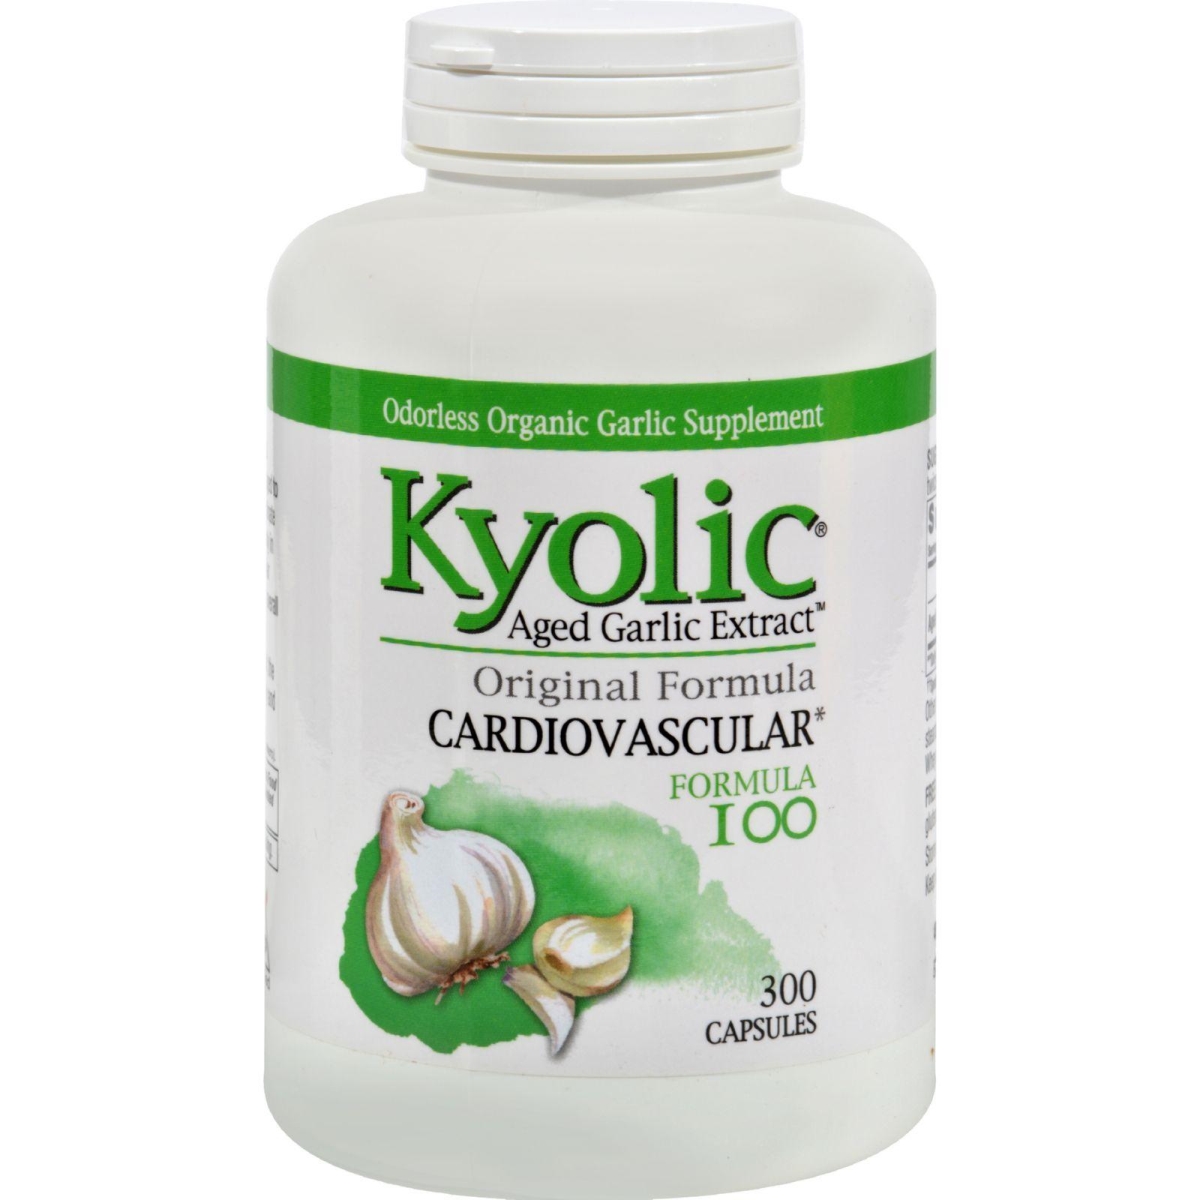 Hg0541227 Aged Garlic Extract Cardiovascular Original Formula 100 - 300 Capsules